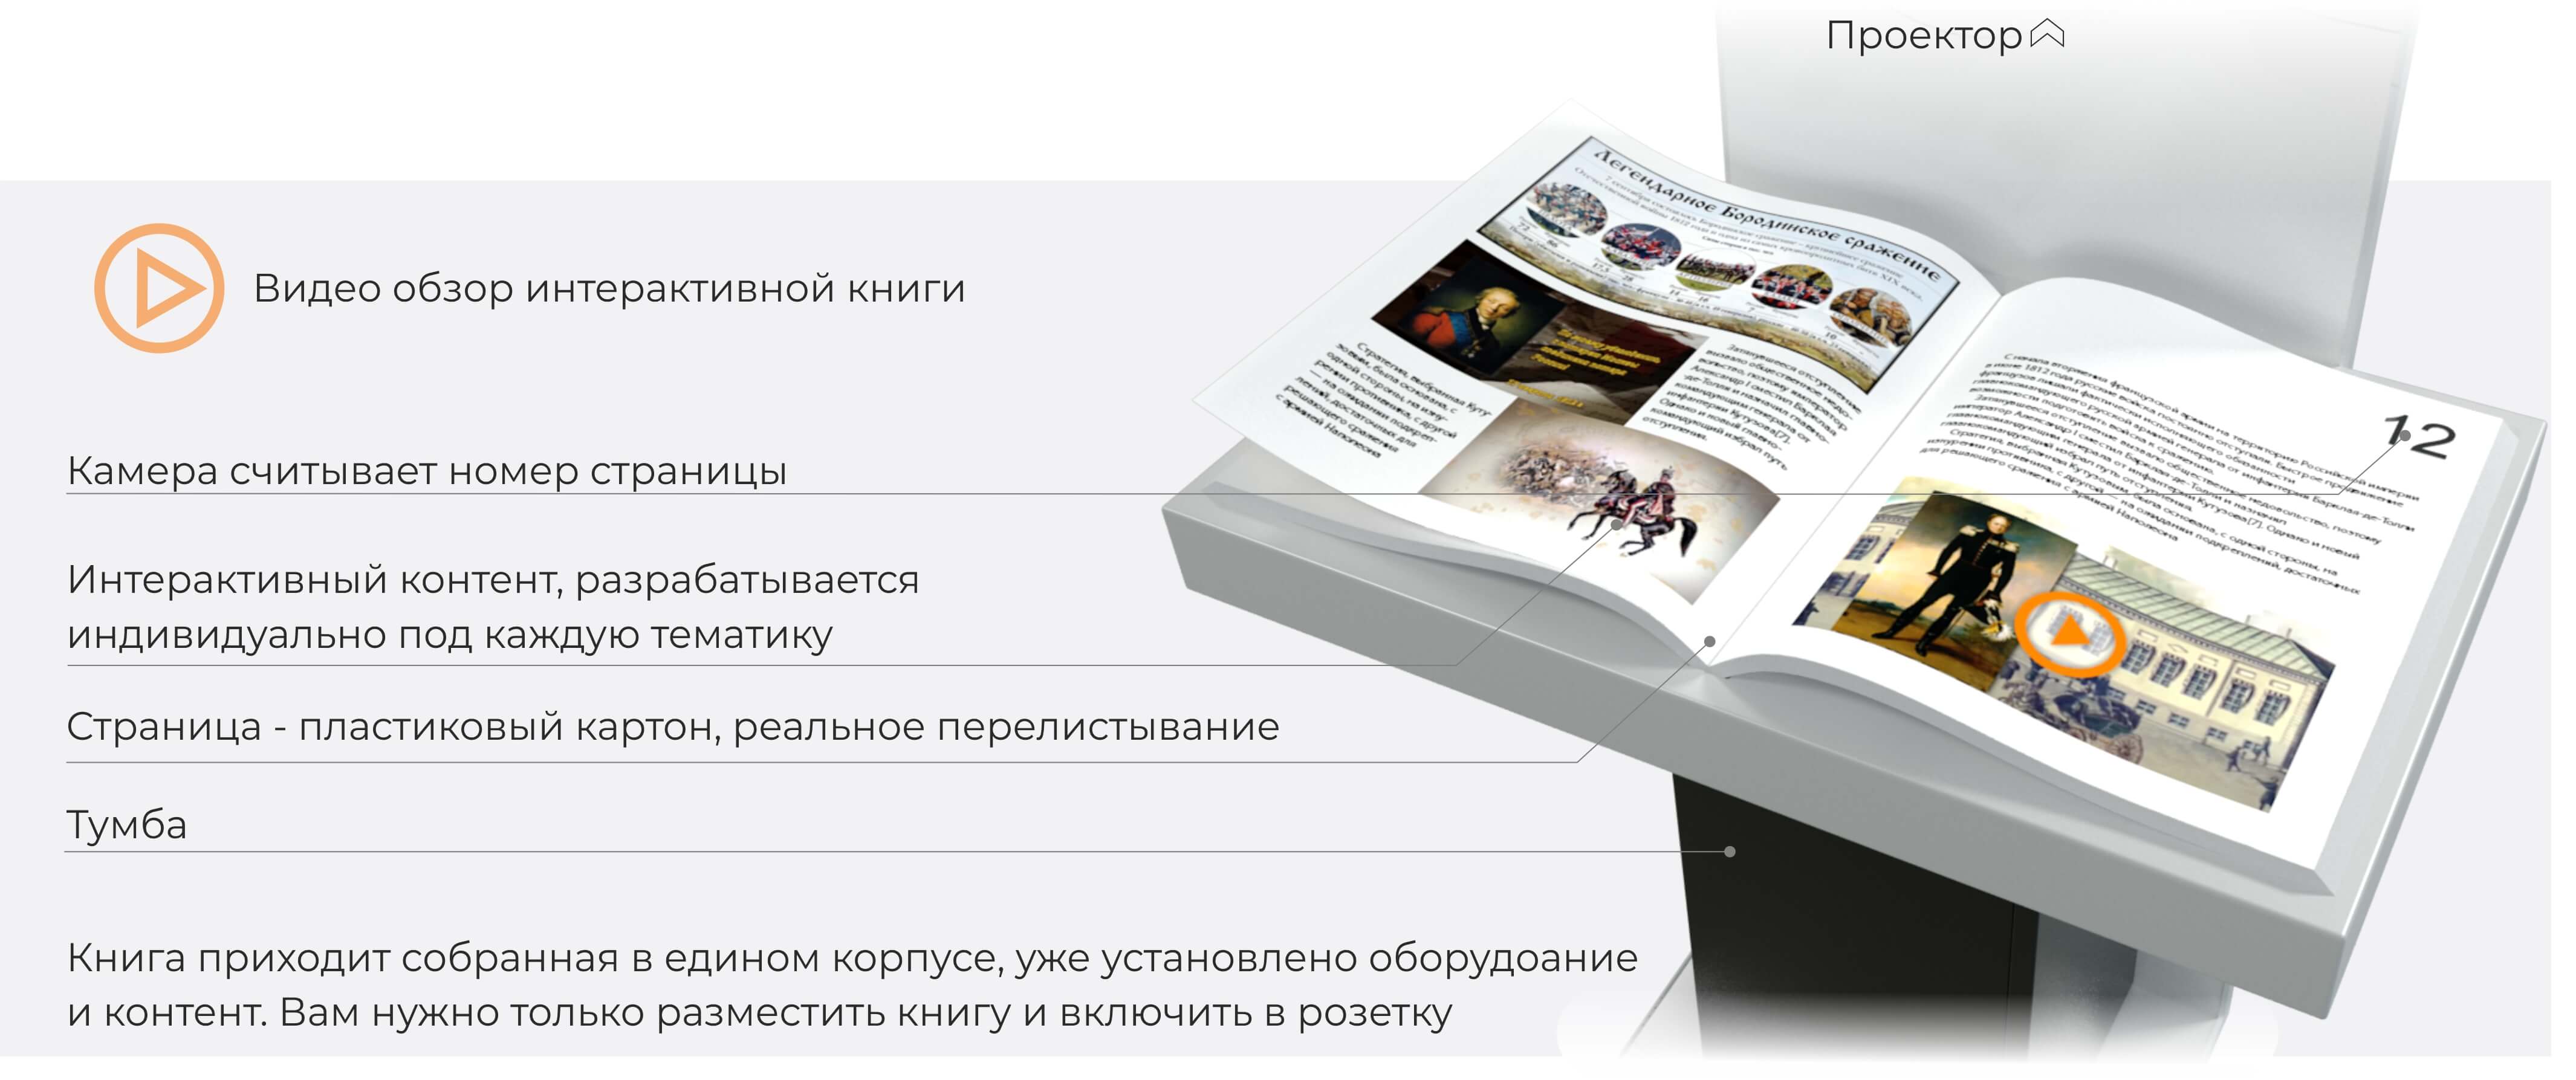 Интерактивная книга «Всё включено»